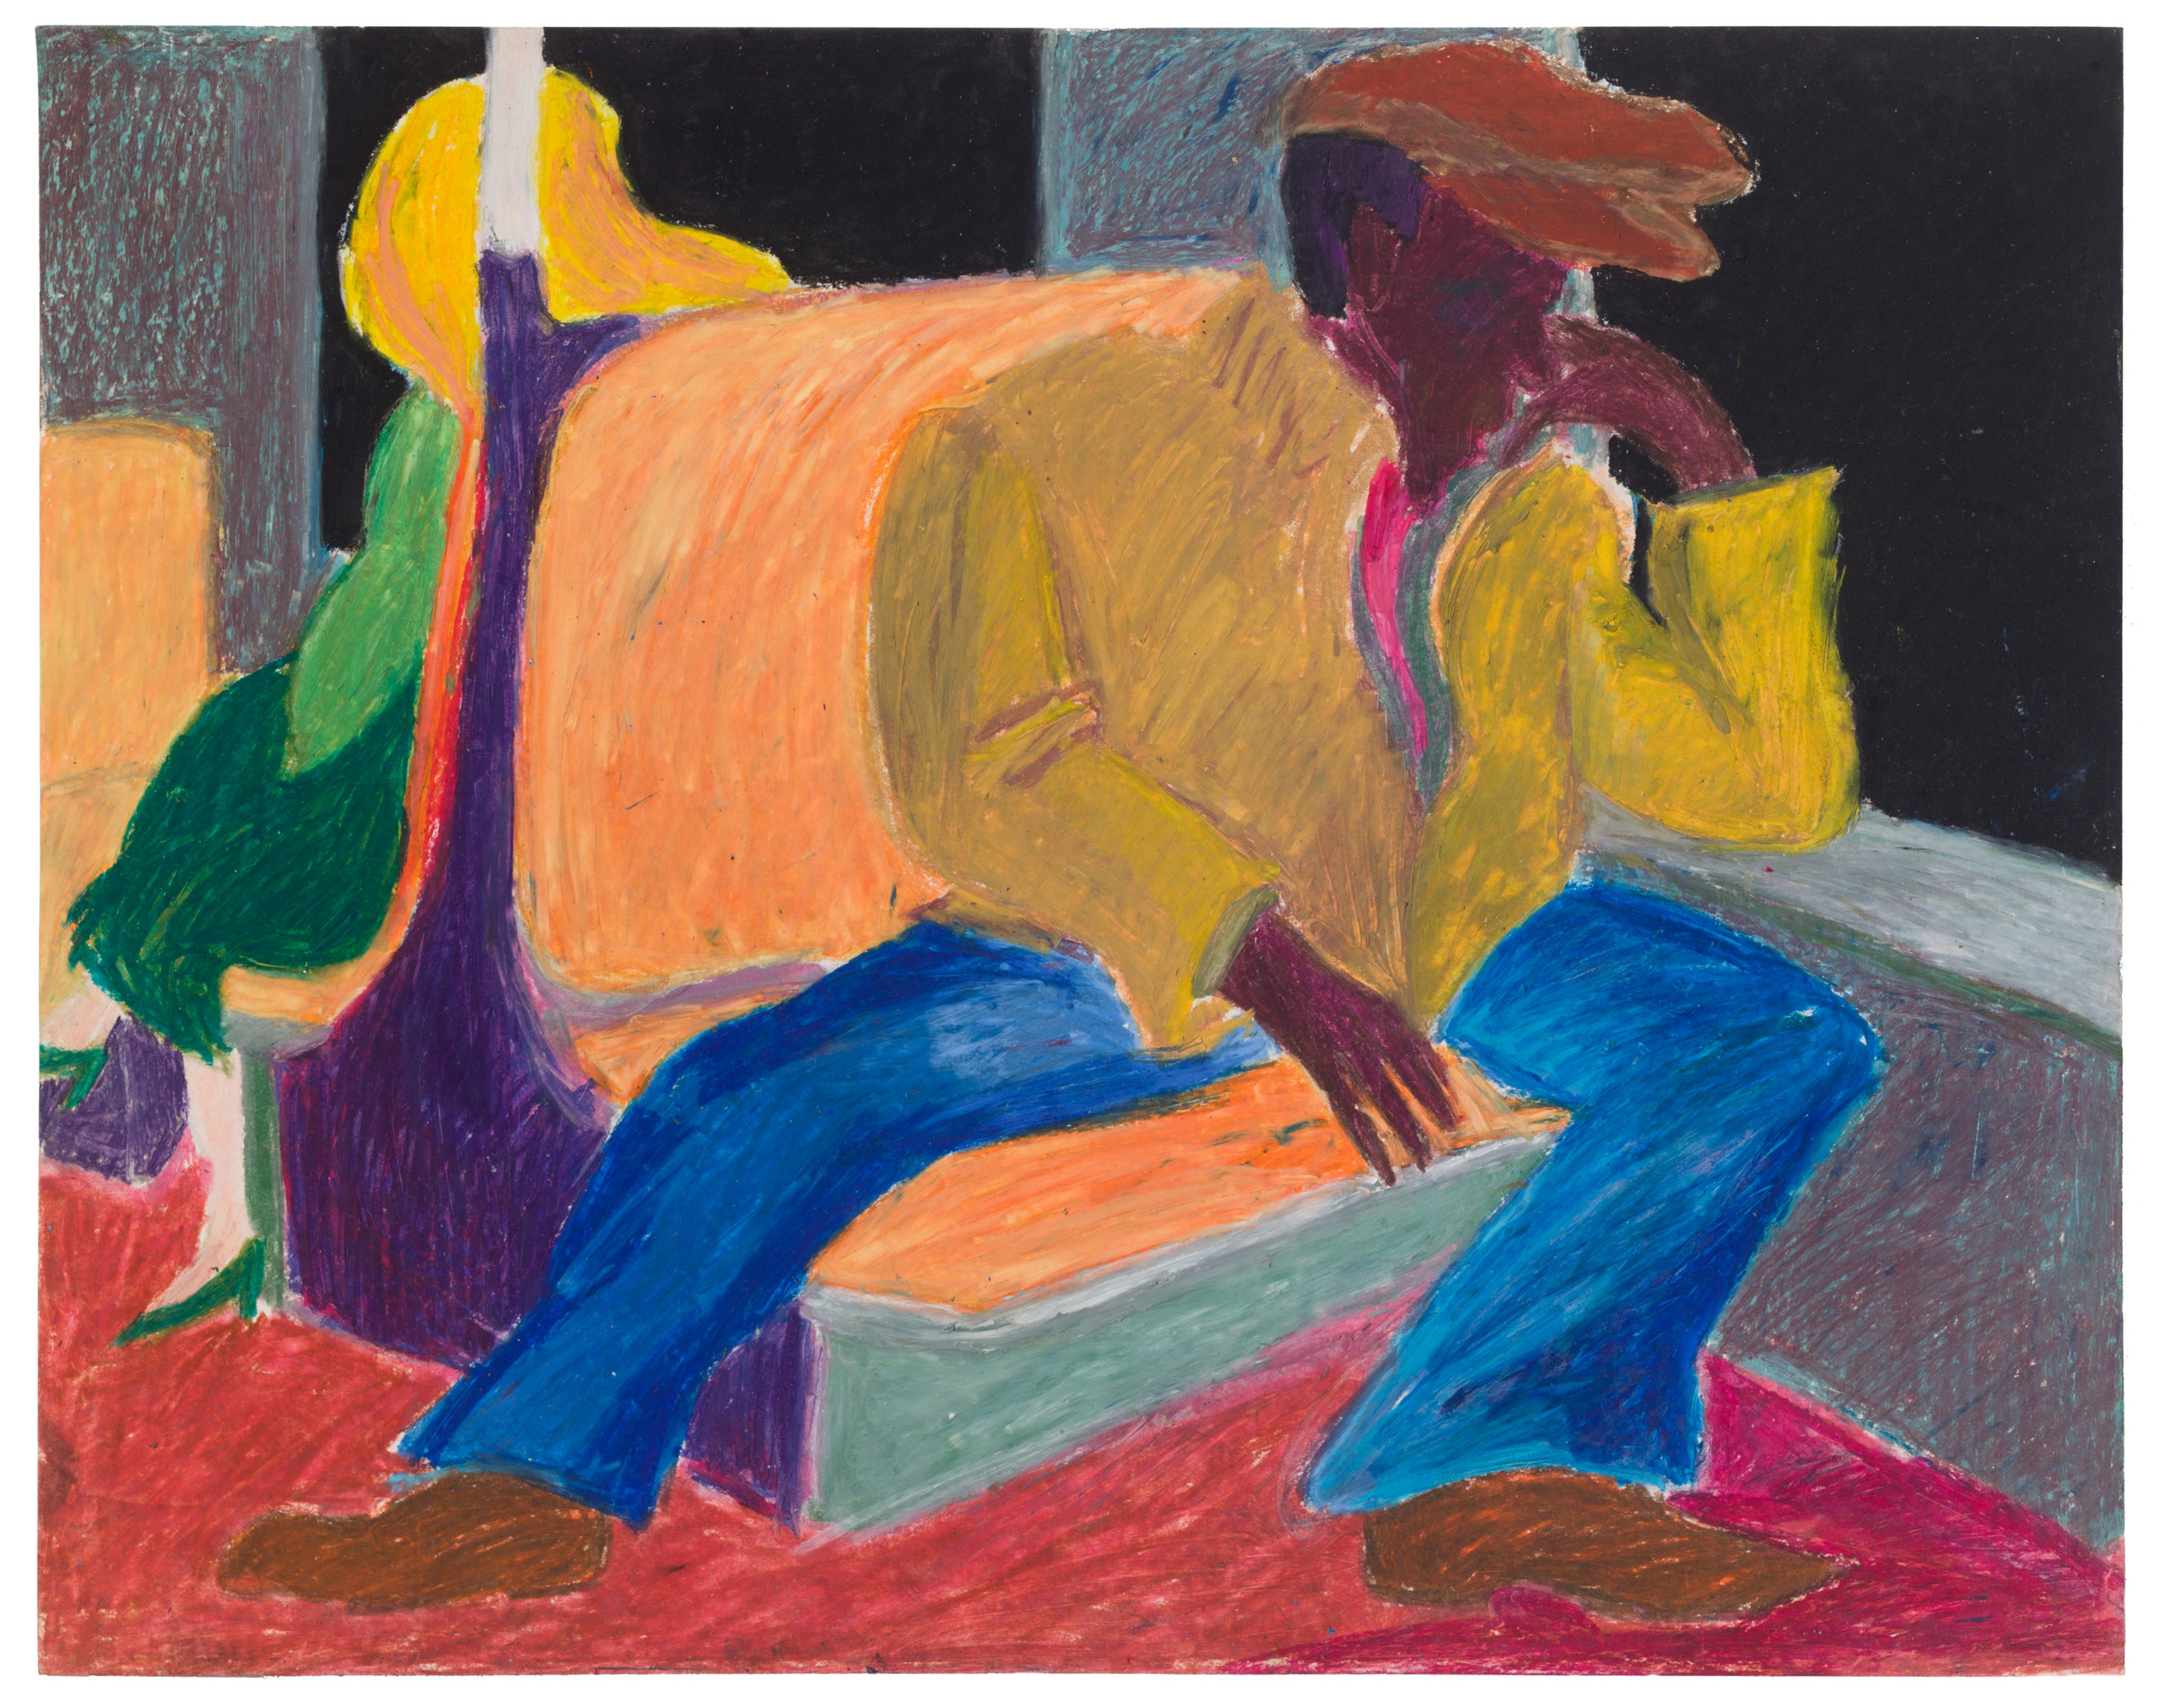 Mimi Gross' "Subway Sleeper" (1962-1963, oil pastel on paper)